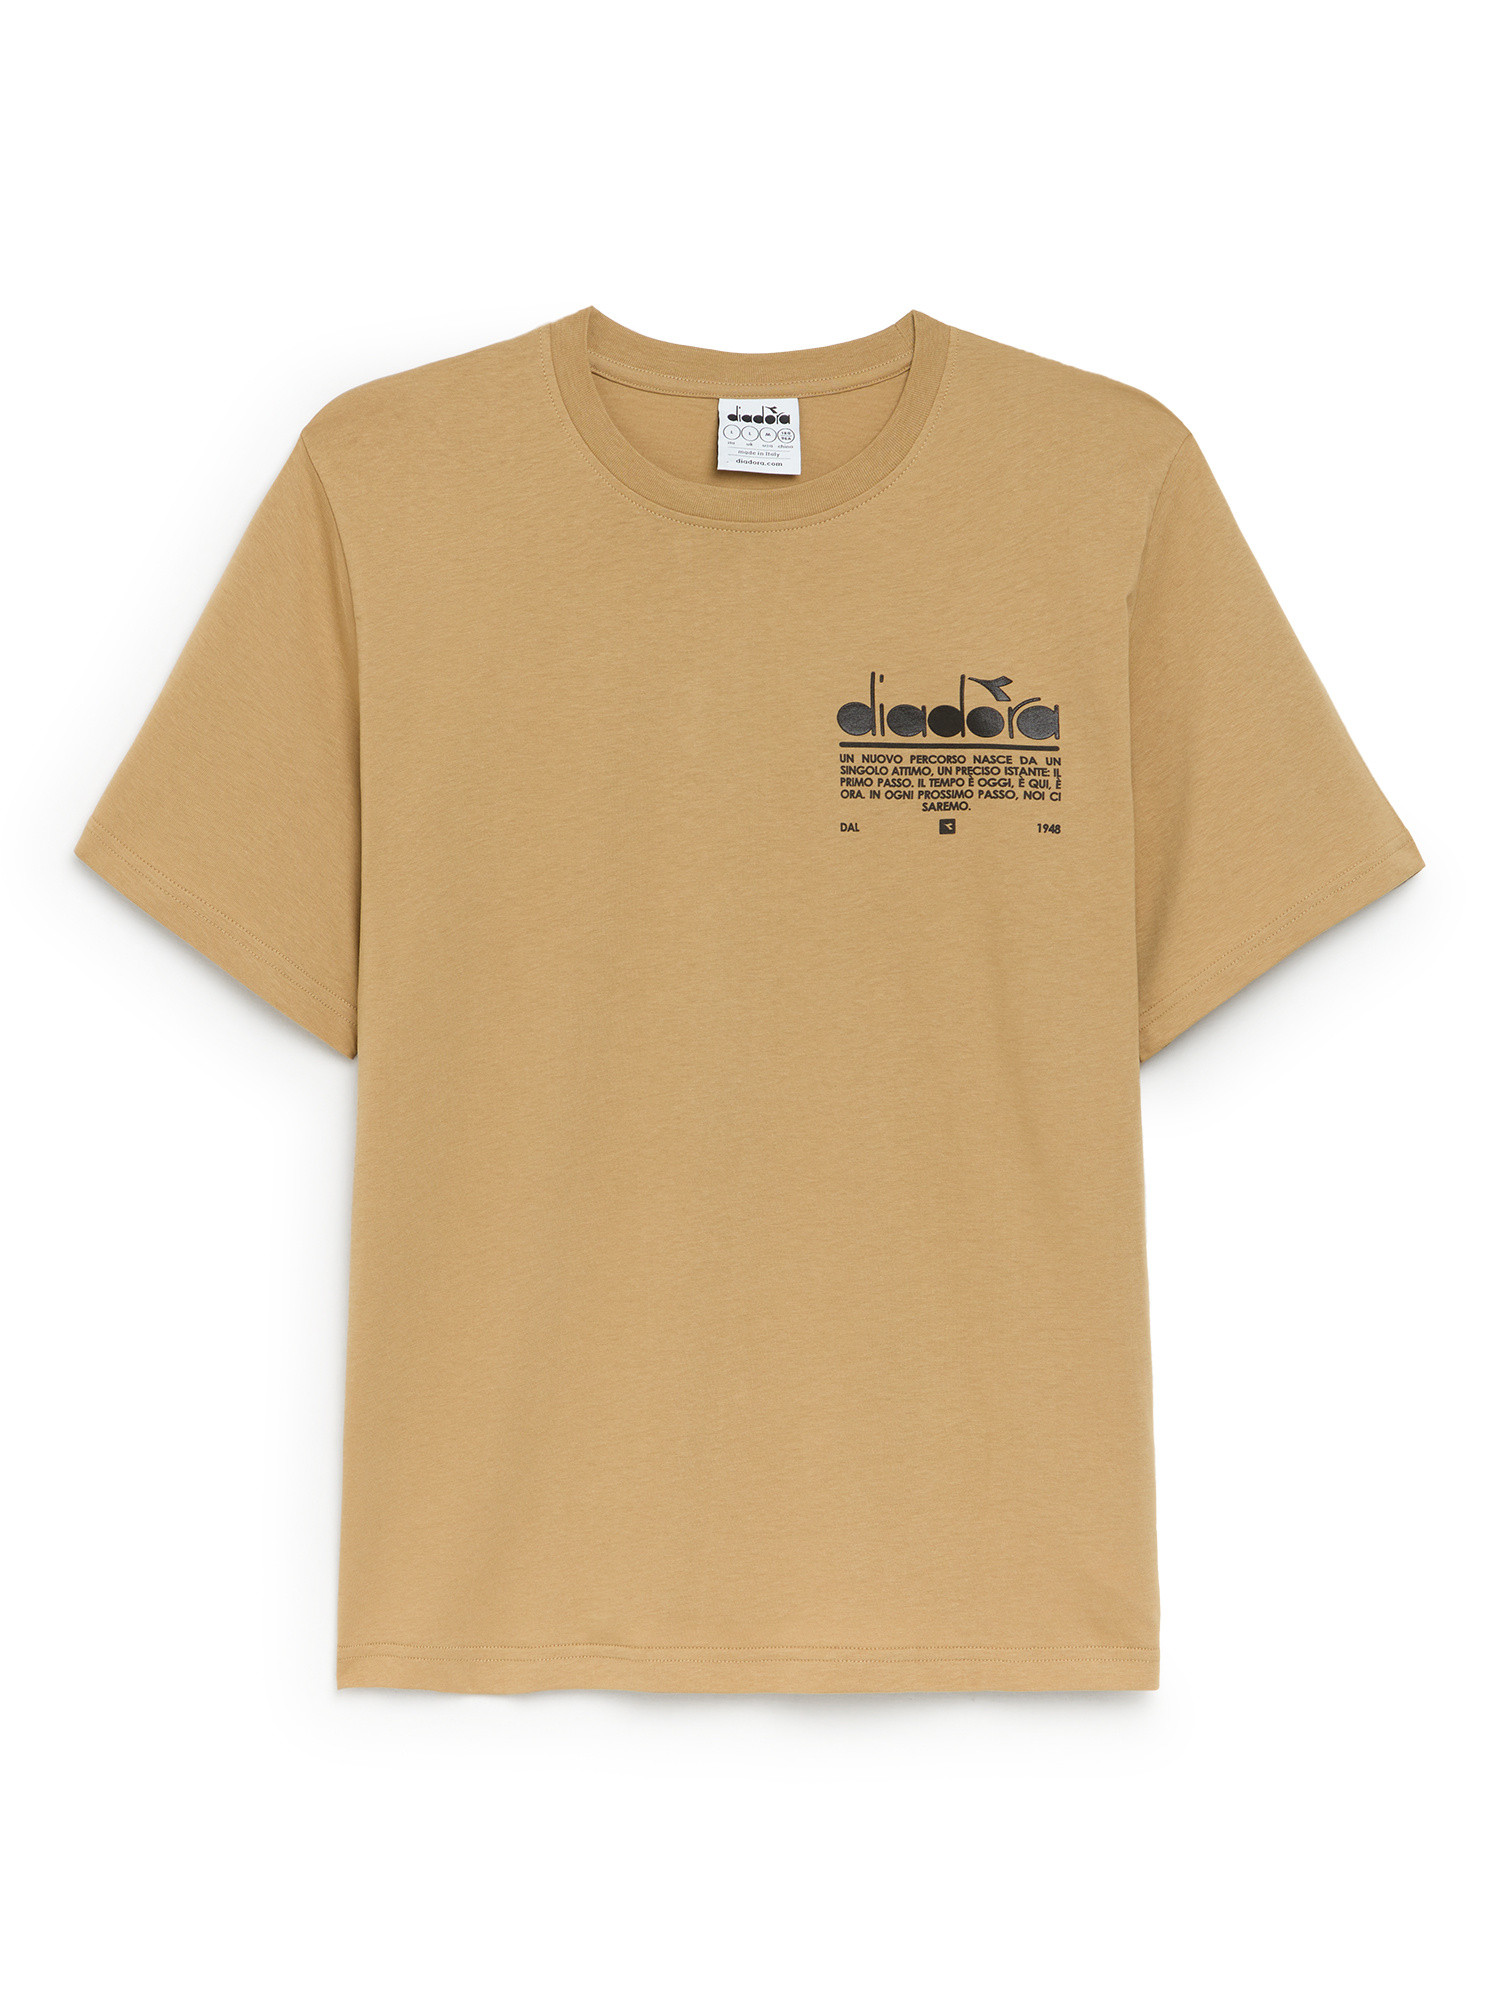 Diadora - T-shirt girocollo Manifesto in cotone, Beige, large image number 0